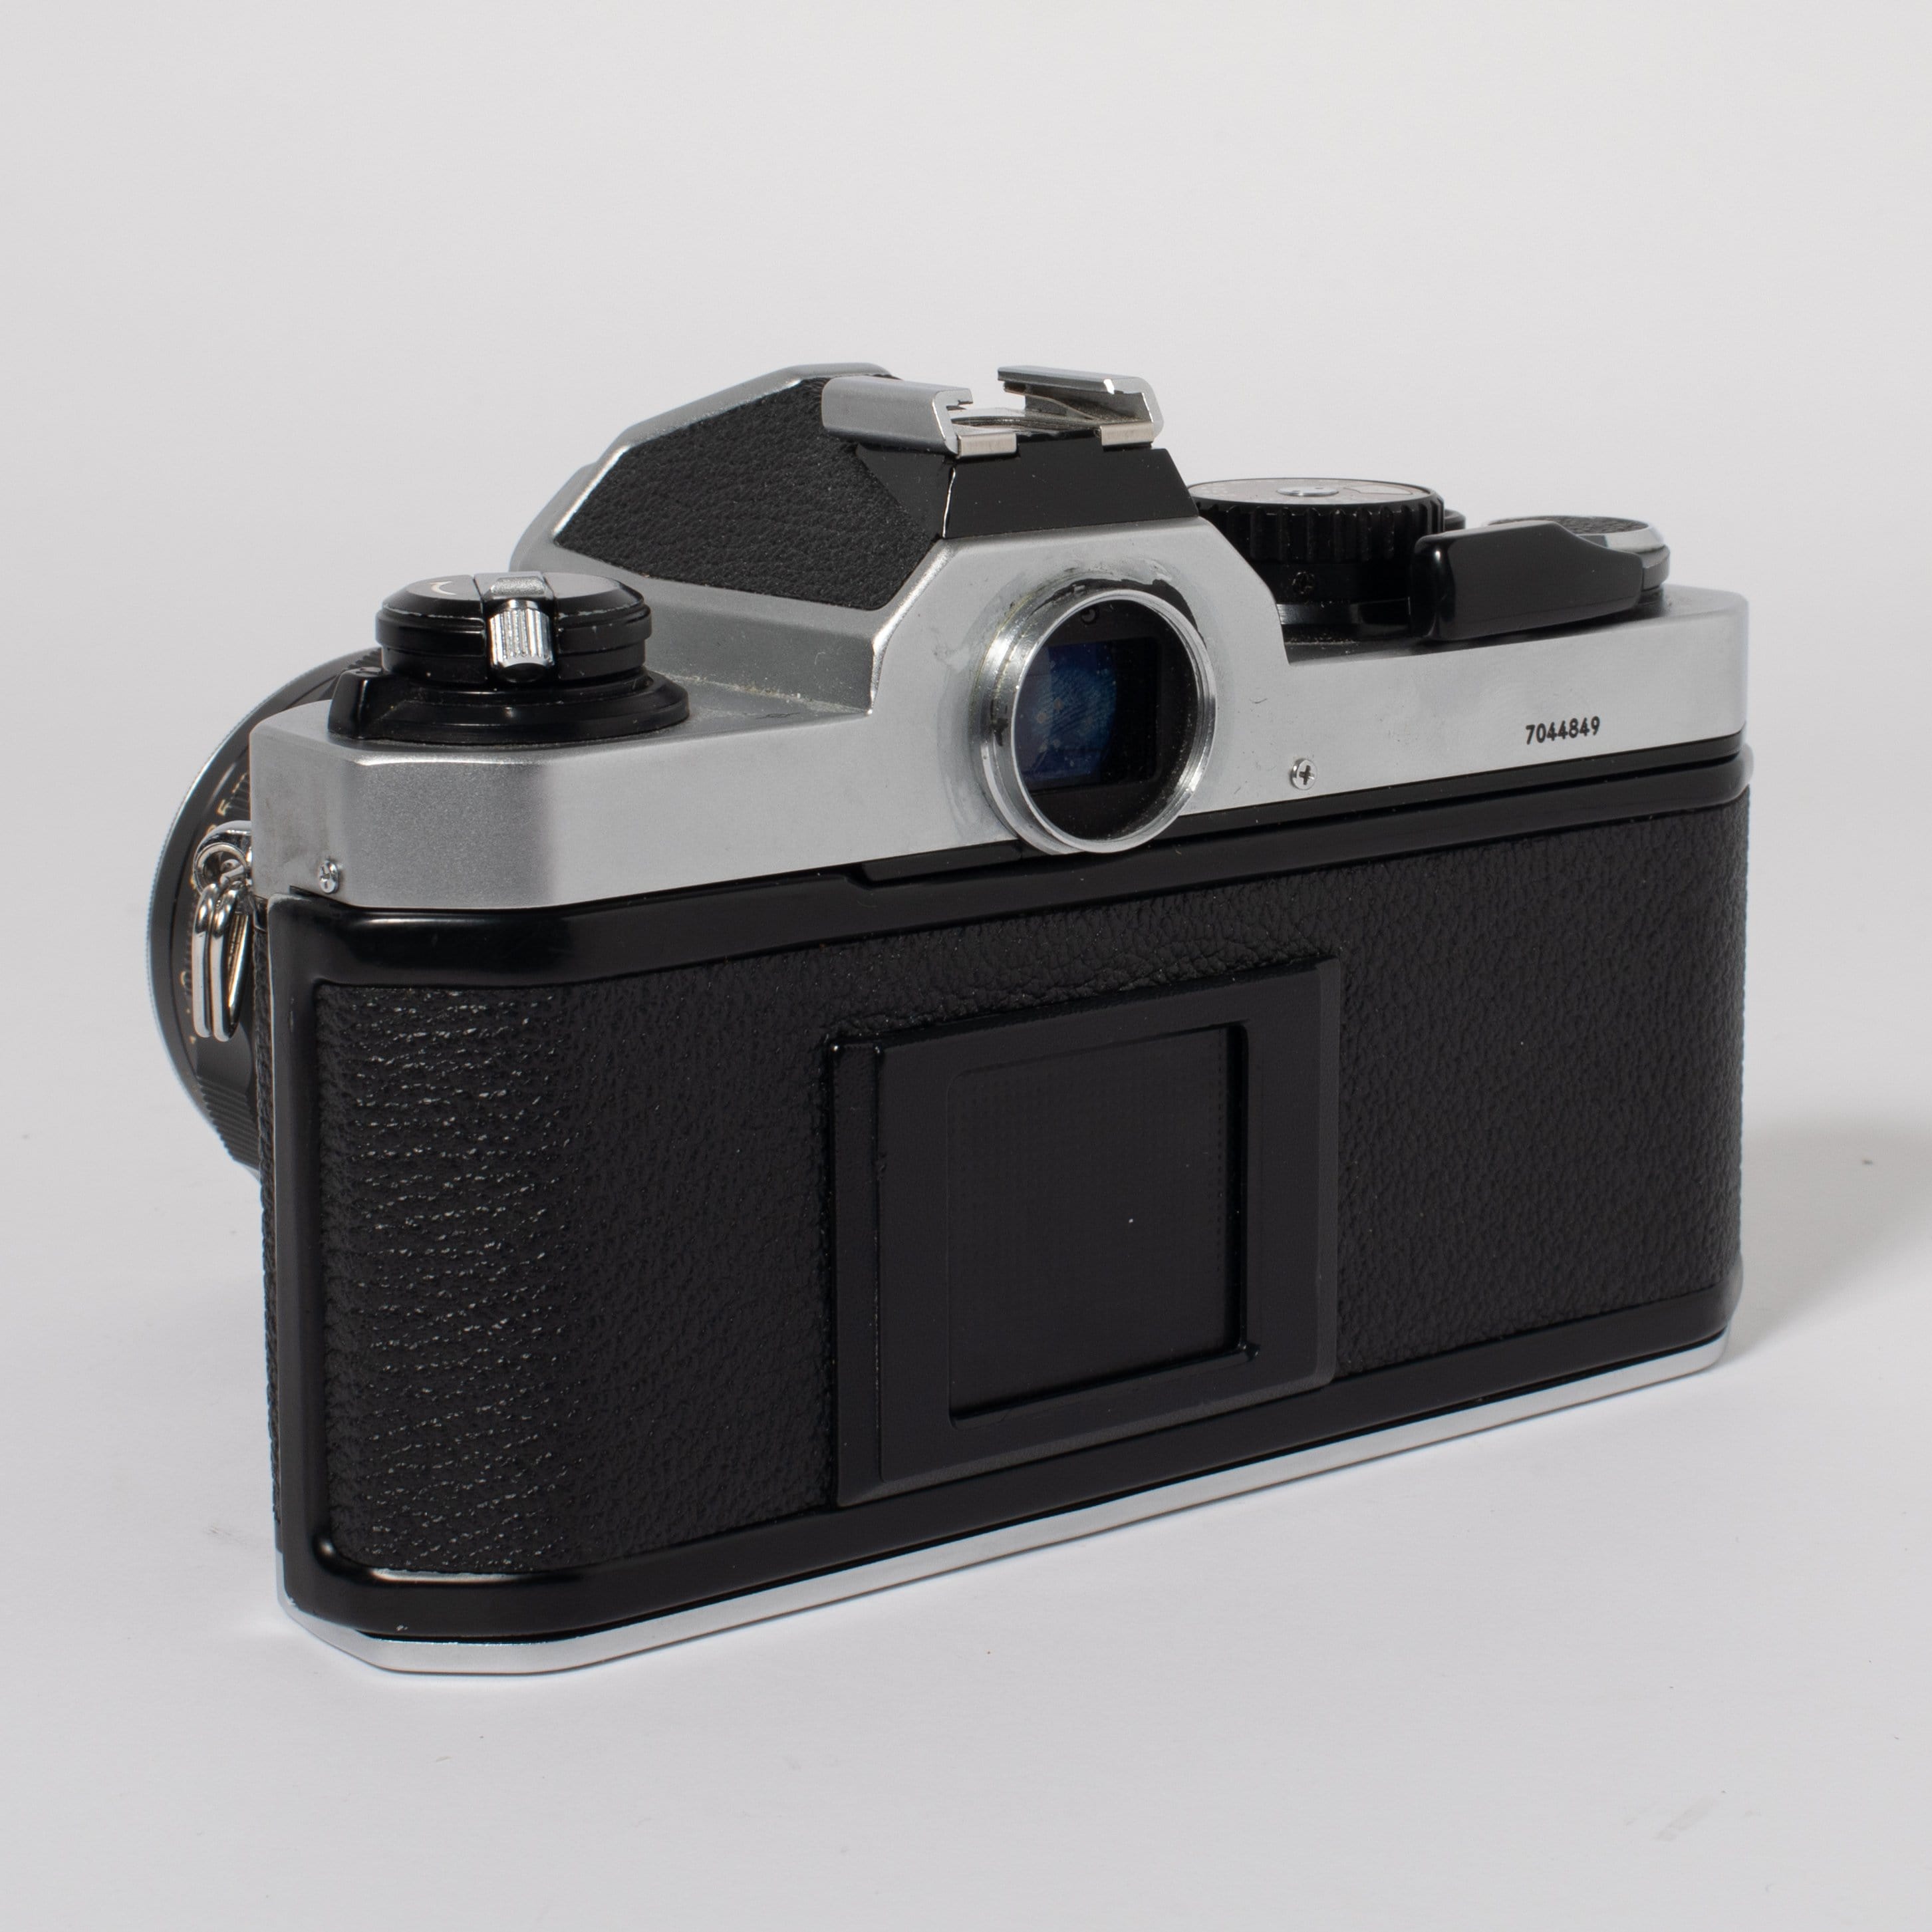 Nikon FM2 w/ 35mm f/2 Lens – Film Supply Club